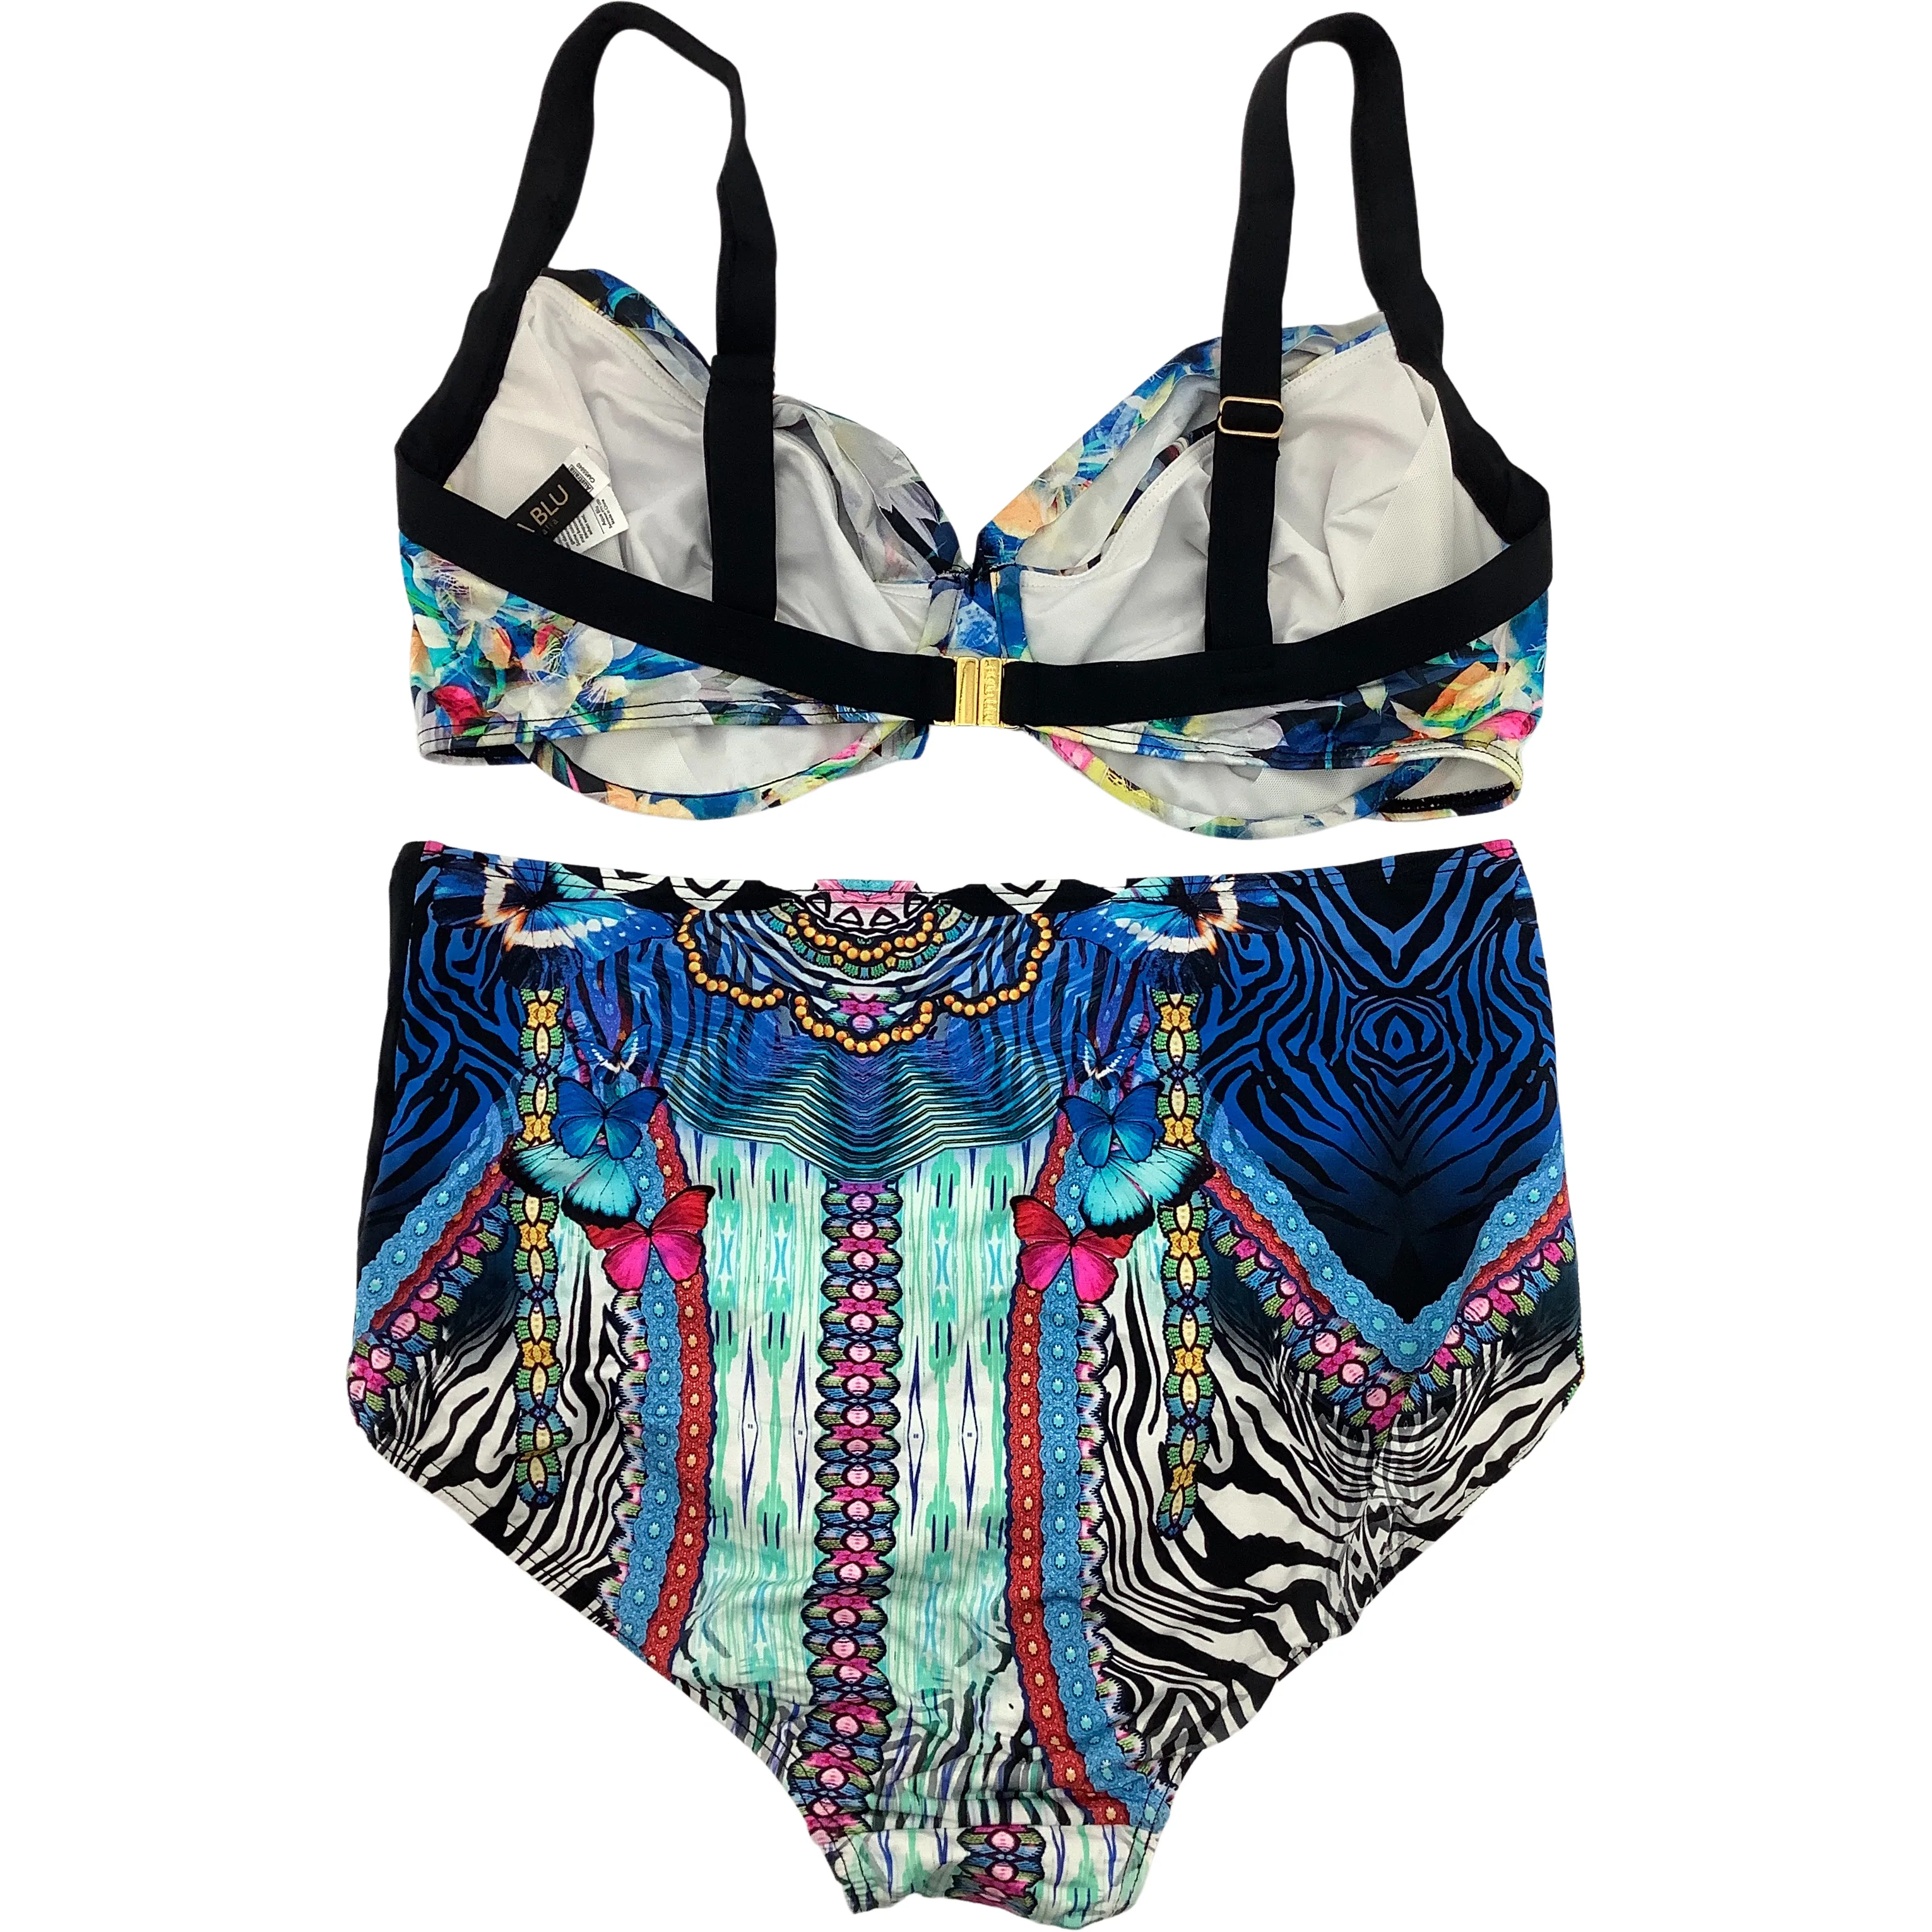 Aqua Blu Women's Bathing Suit / Bikini Style Swim Suit / High Waisted / Size 12